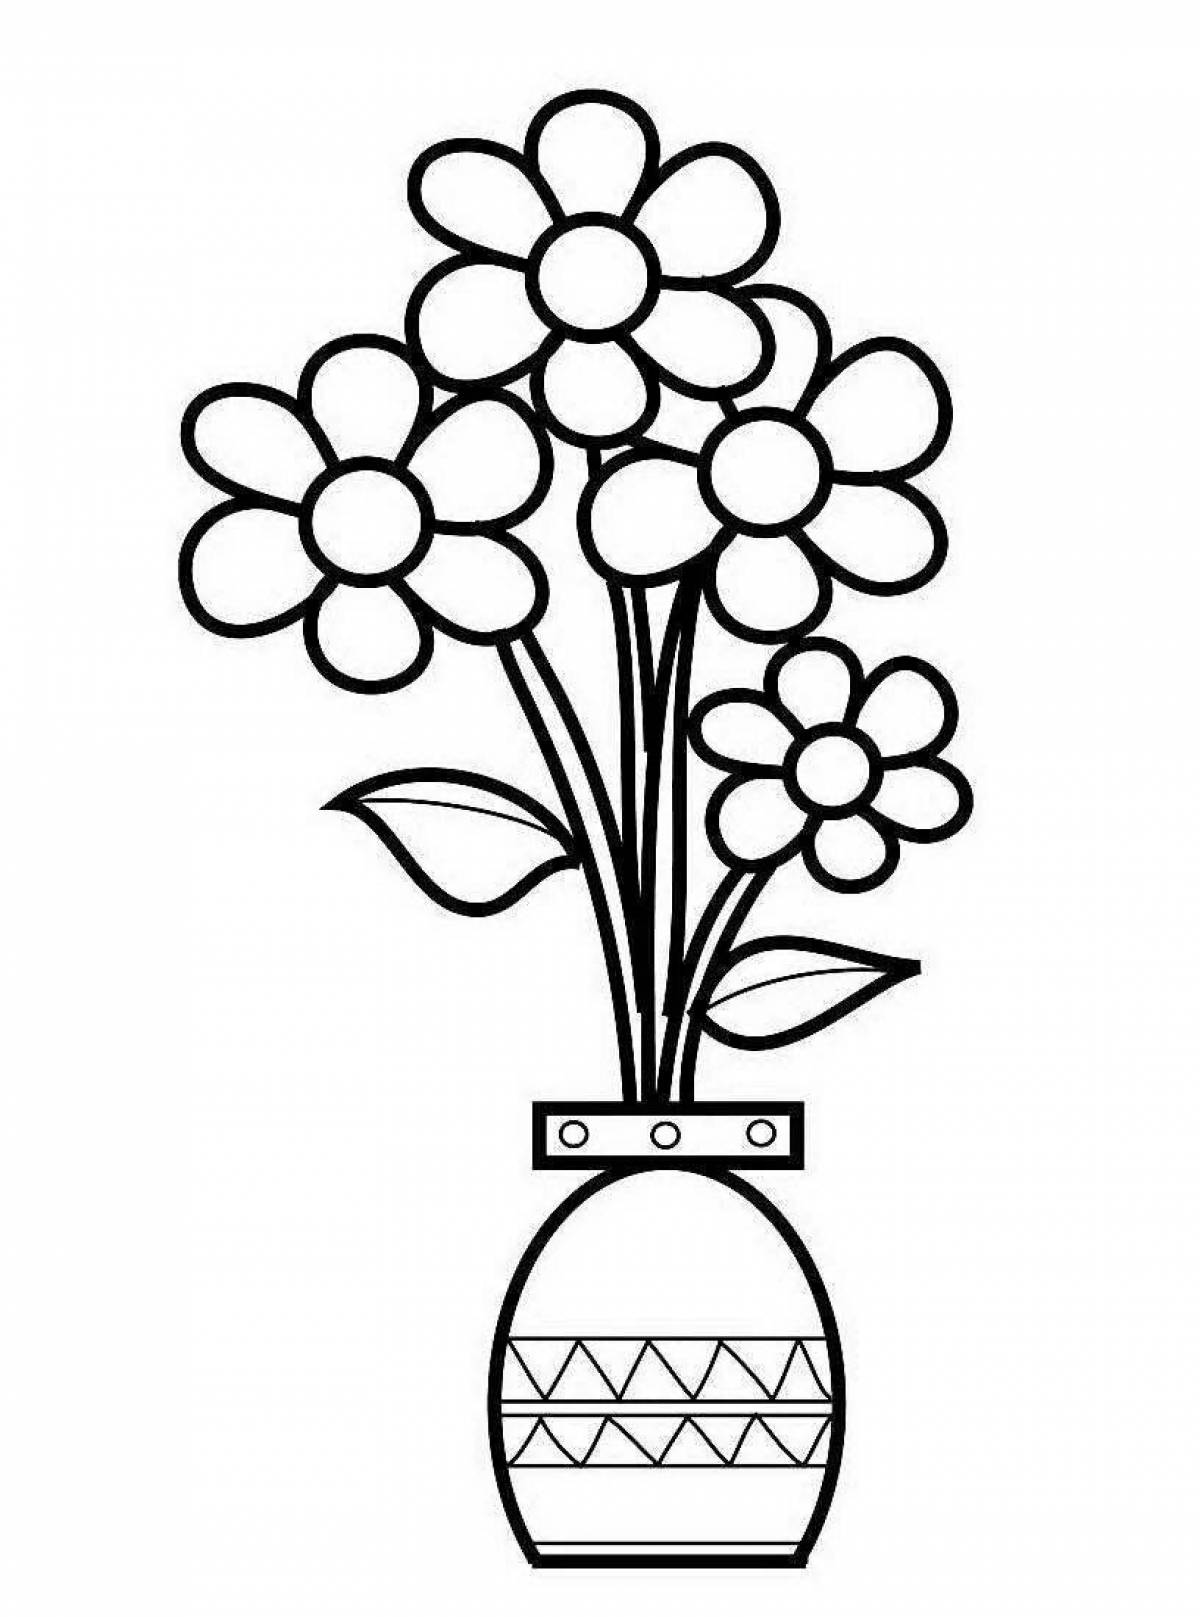 Раскраска ваза с цветами для детей - 70 фото